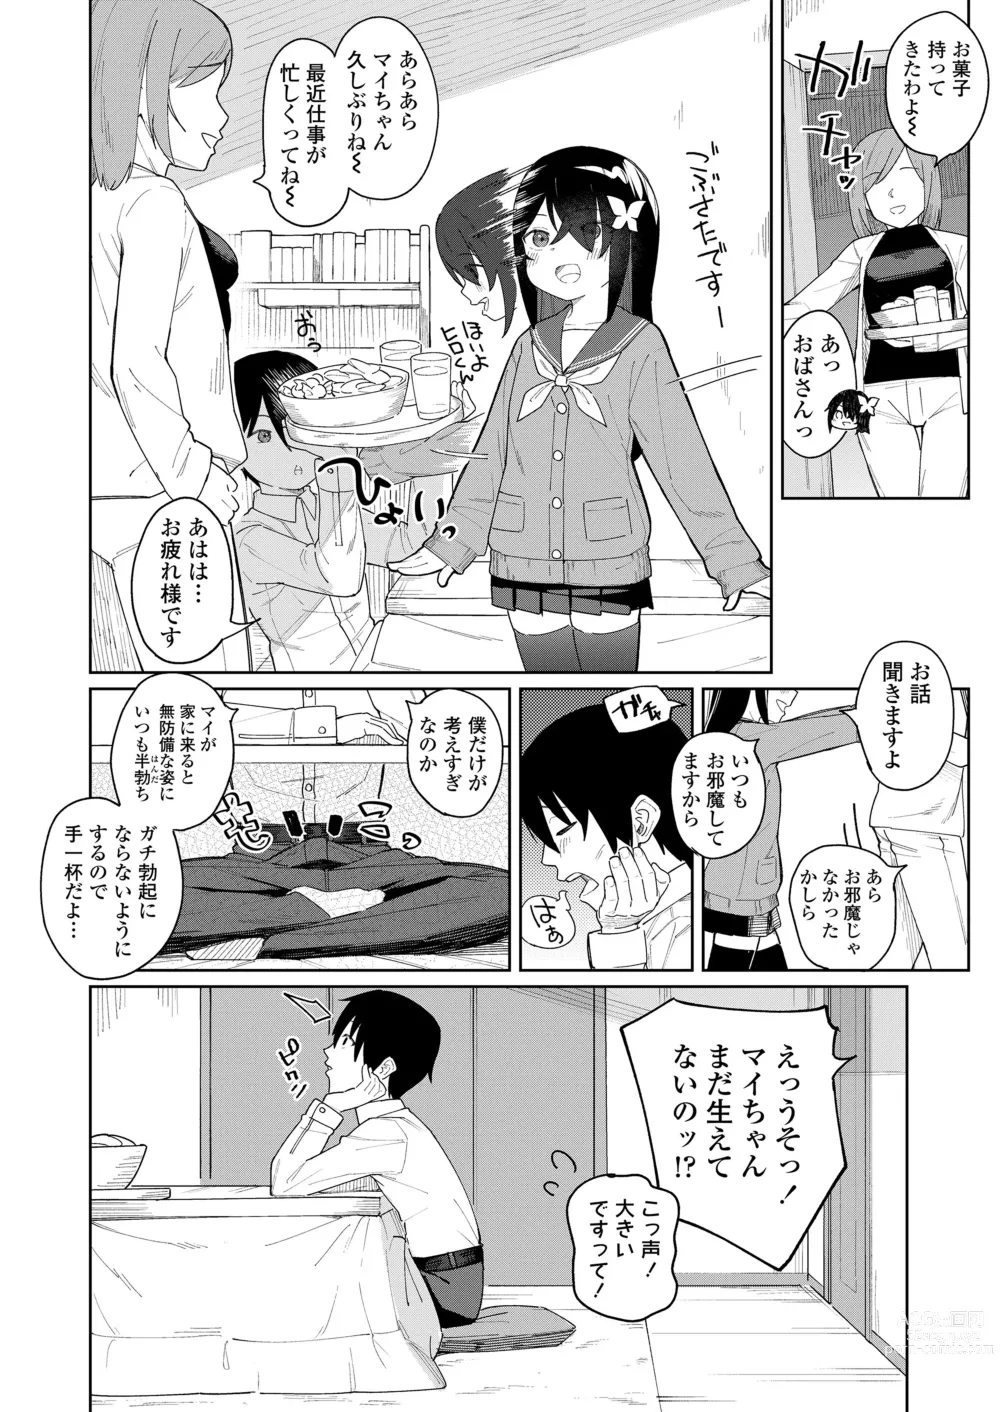 Page 70 of manga Koakuma-tachi ga Yattekita!